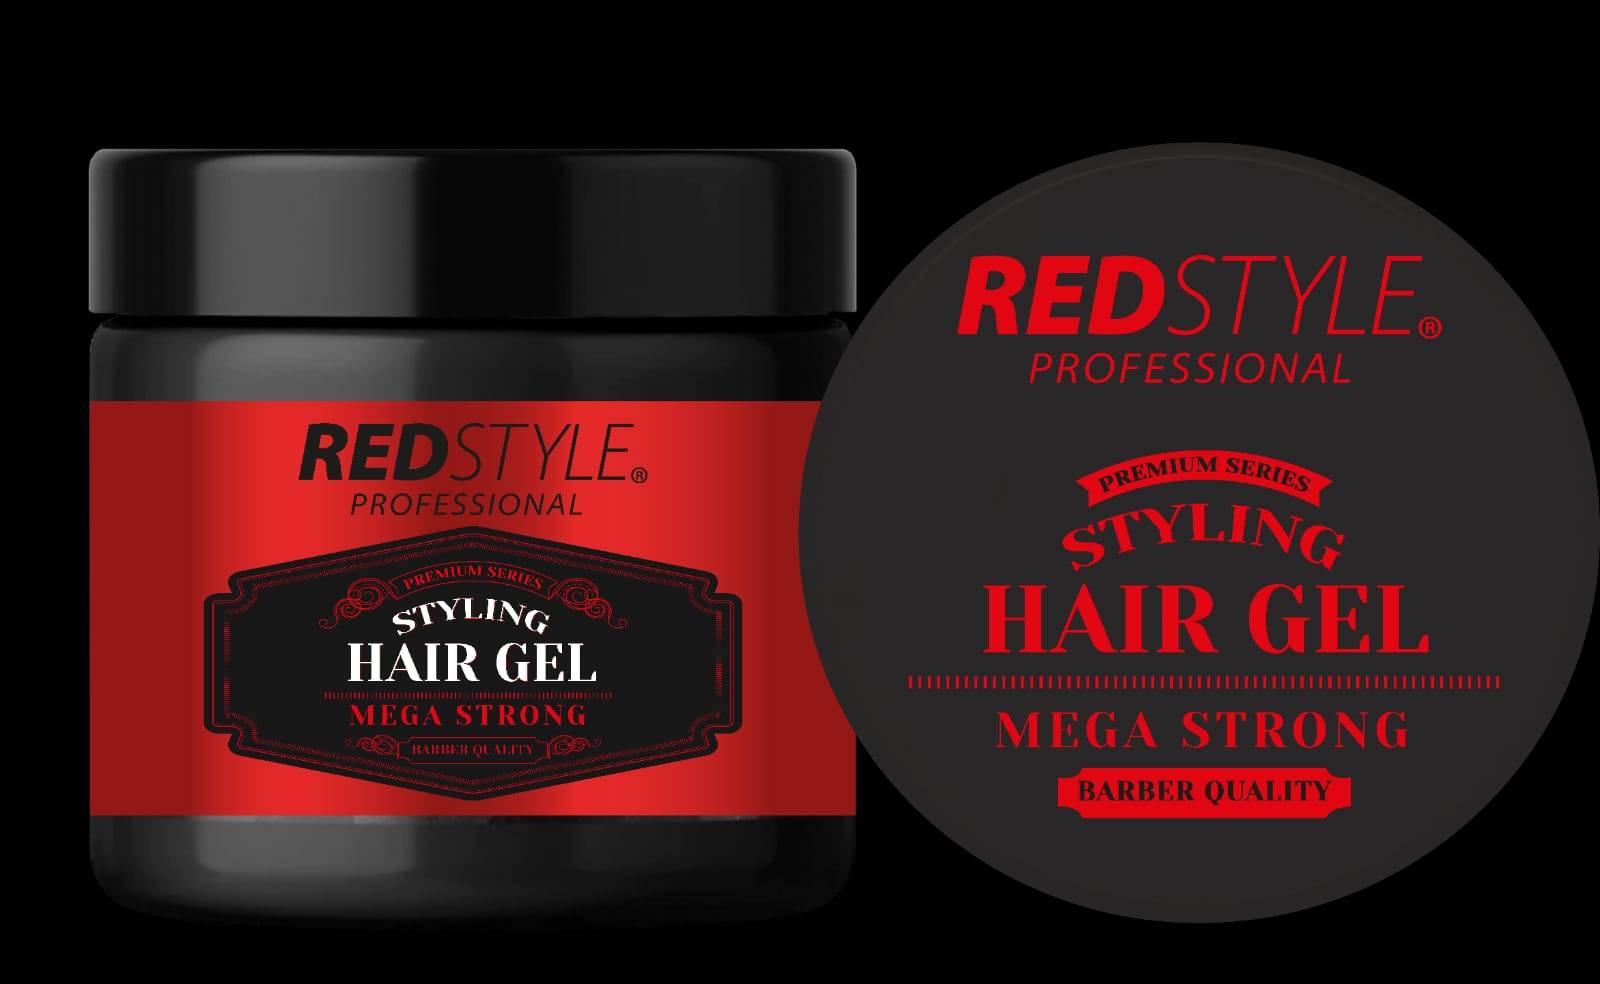 Redstyle Professional Styling Hair Gel Mega Strong - Styling Gel, Perfekter Glanz in Friseur-Qualität